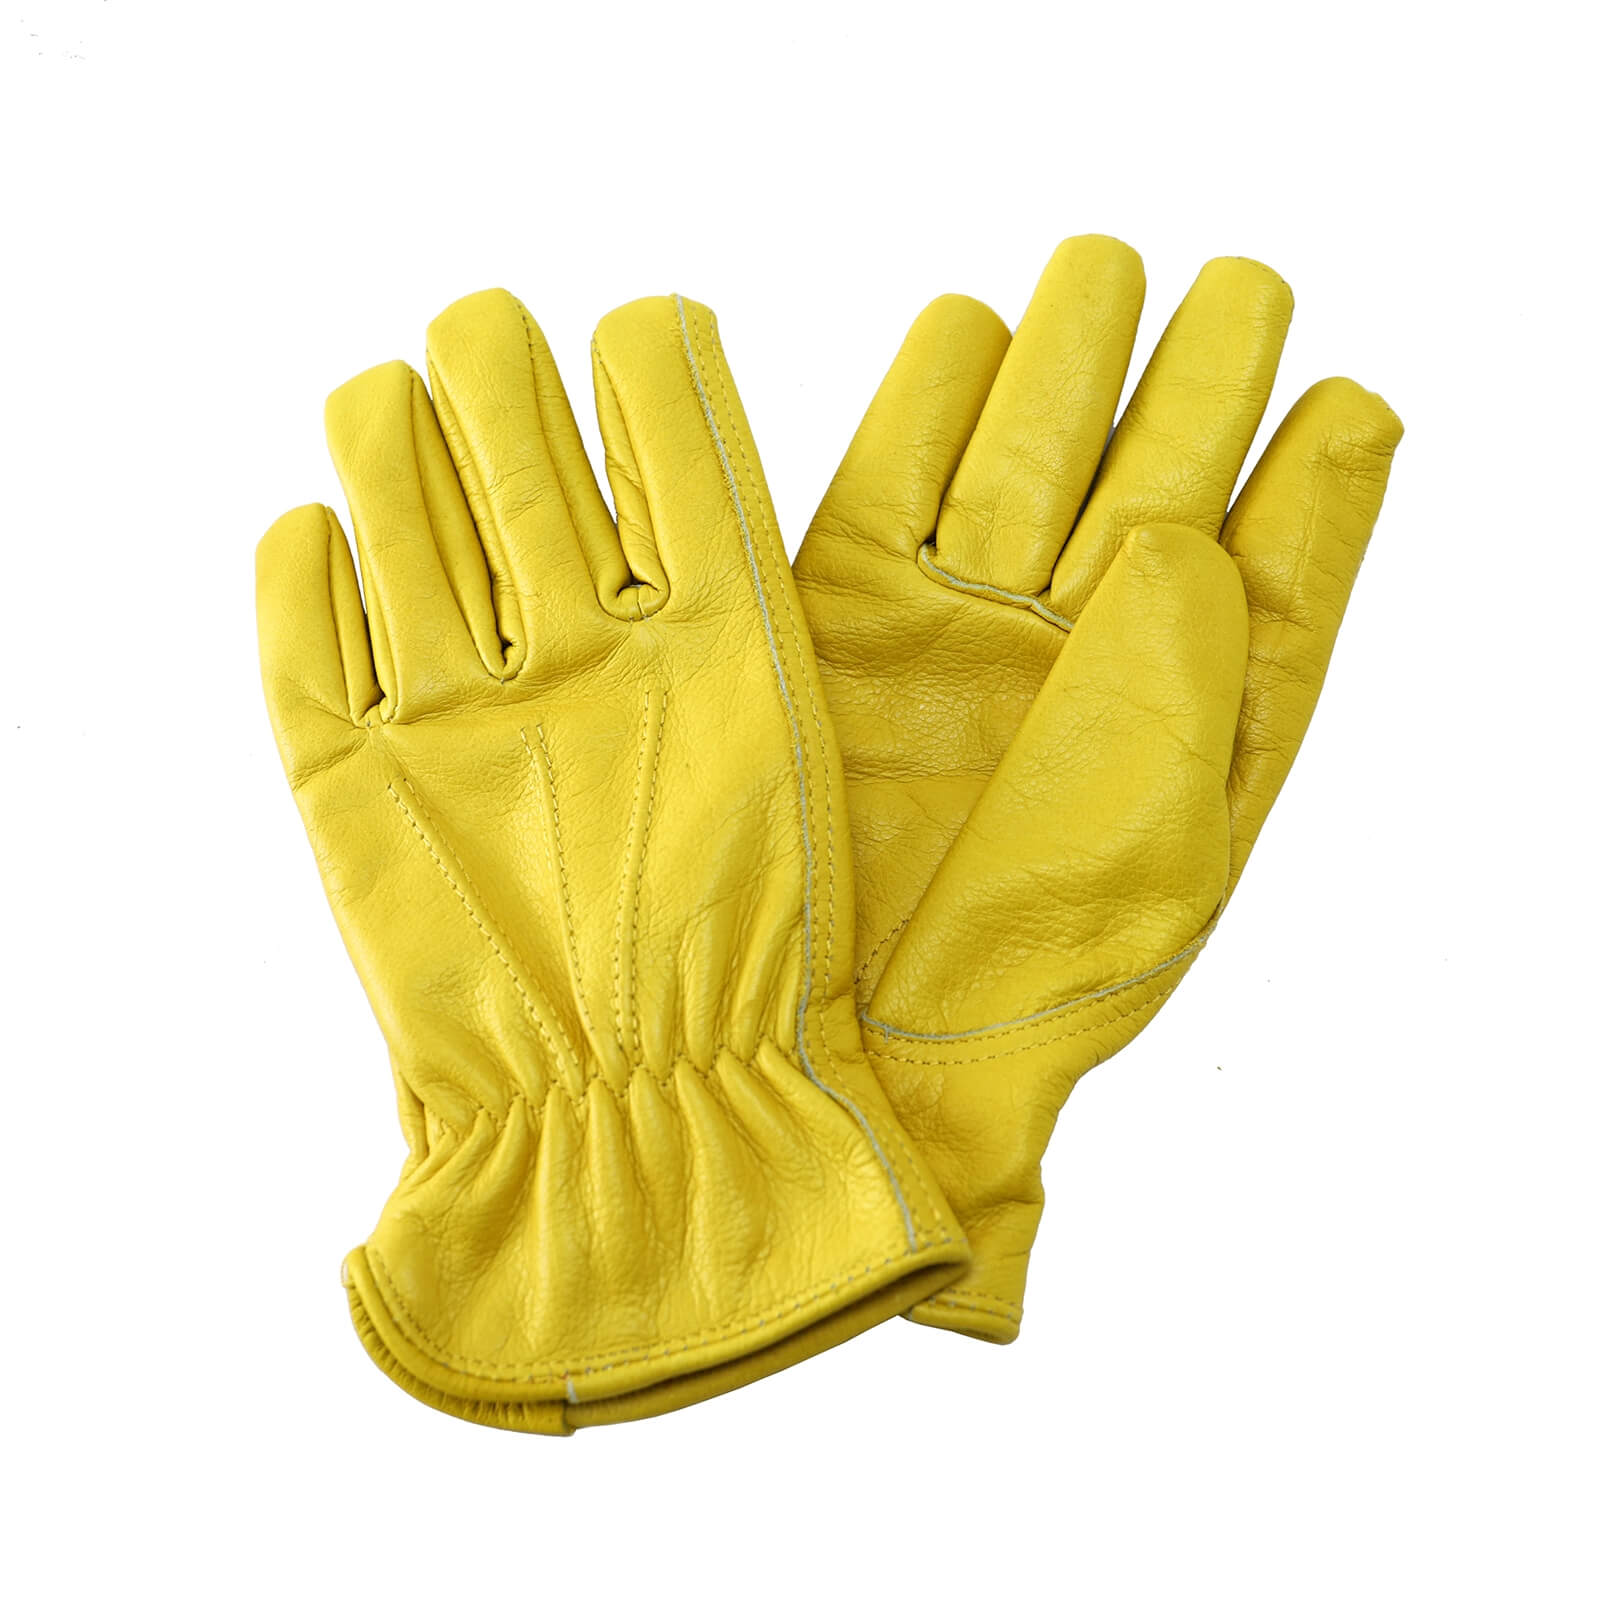 Kent & Stowe Luxury Leather Gloves - Large